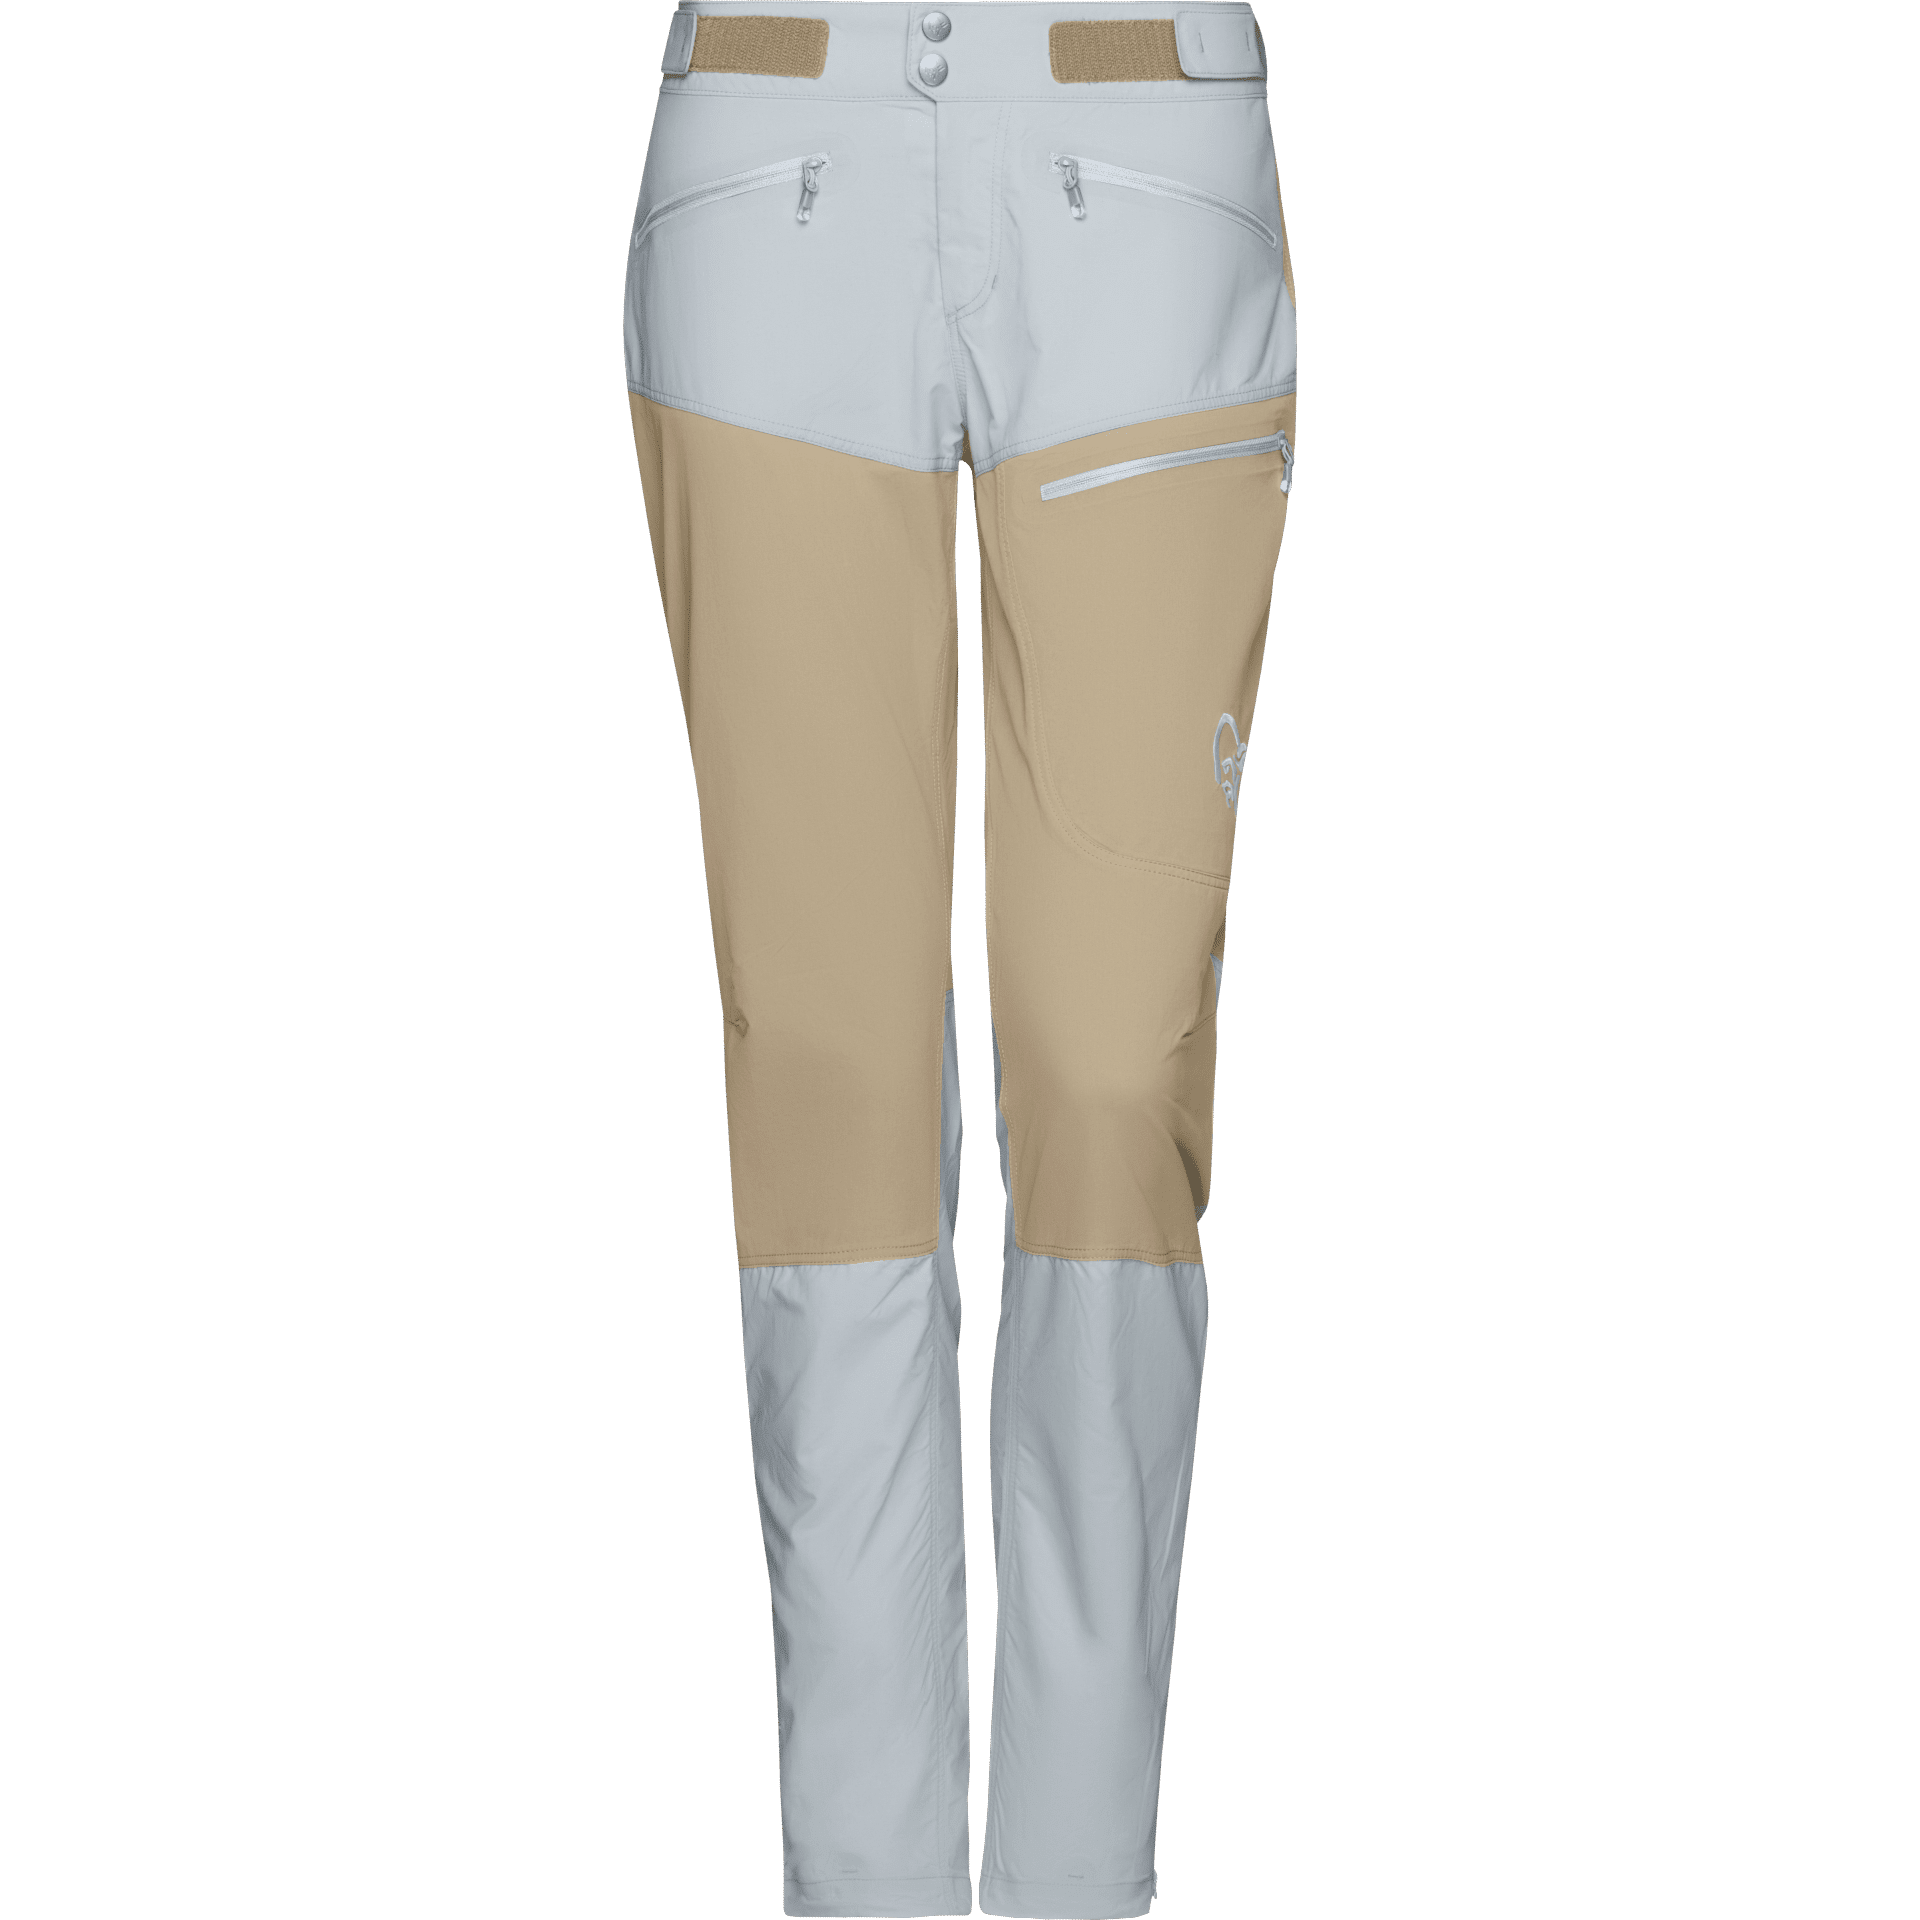 Nørrona Bitihorn Lightweight Pants - Walking pants - Women's